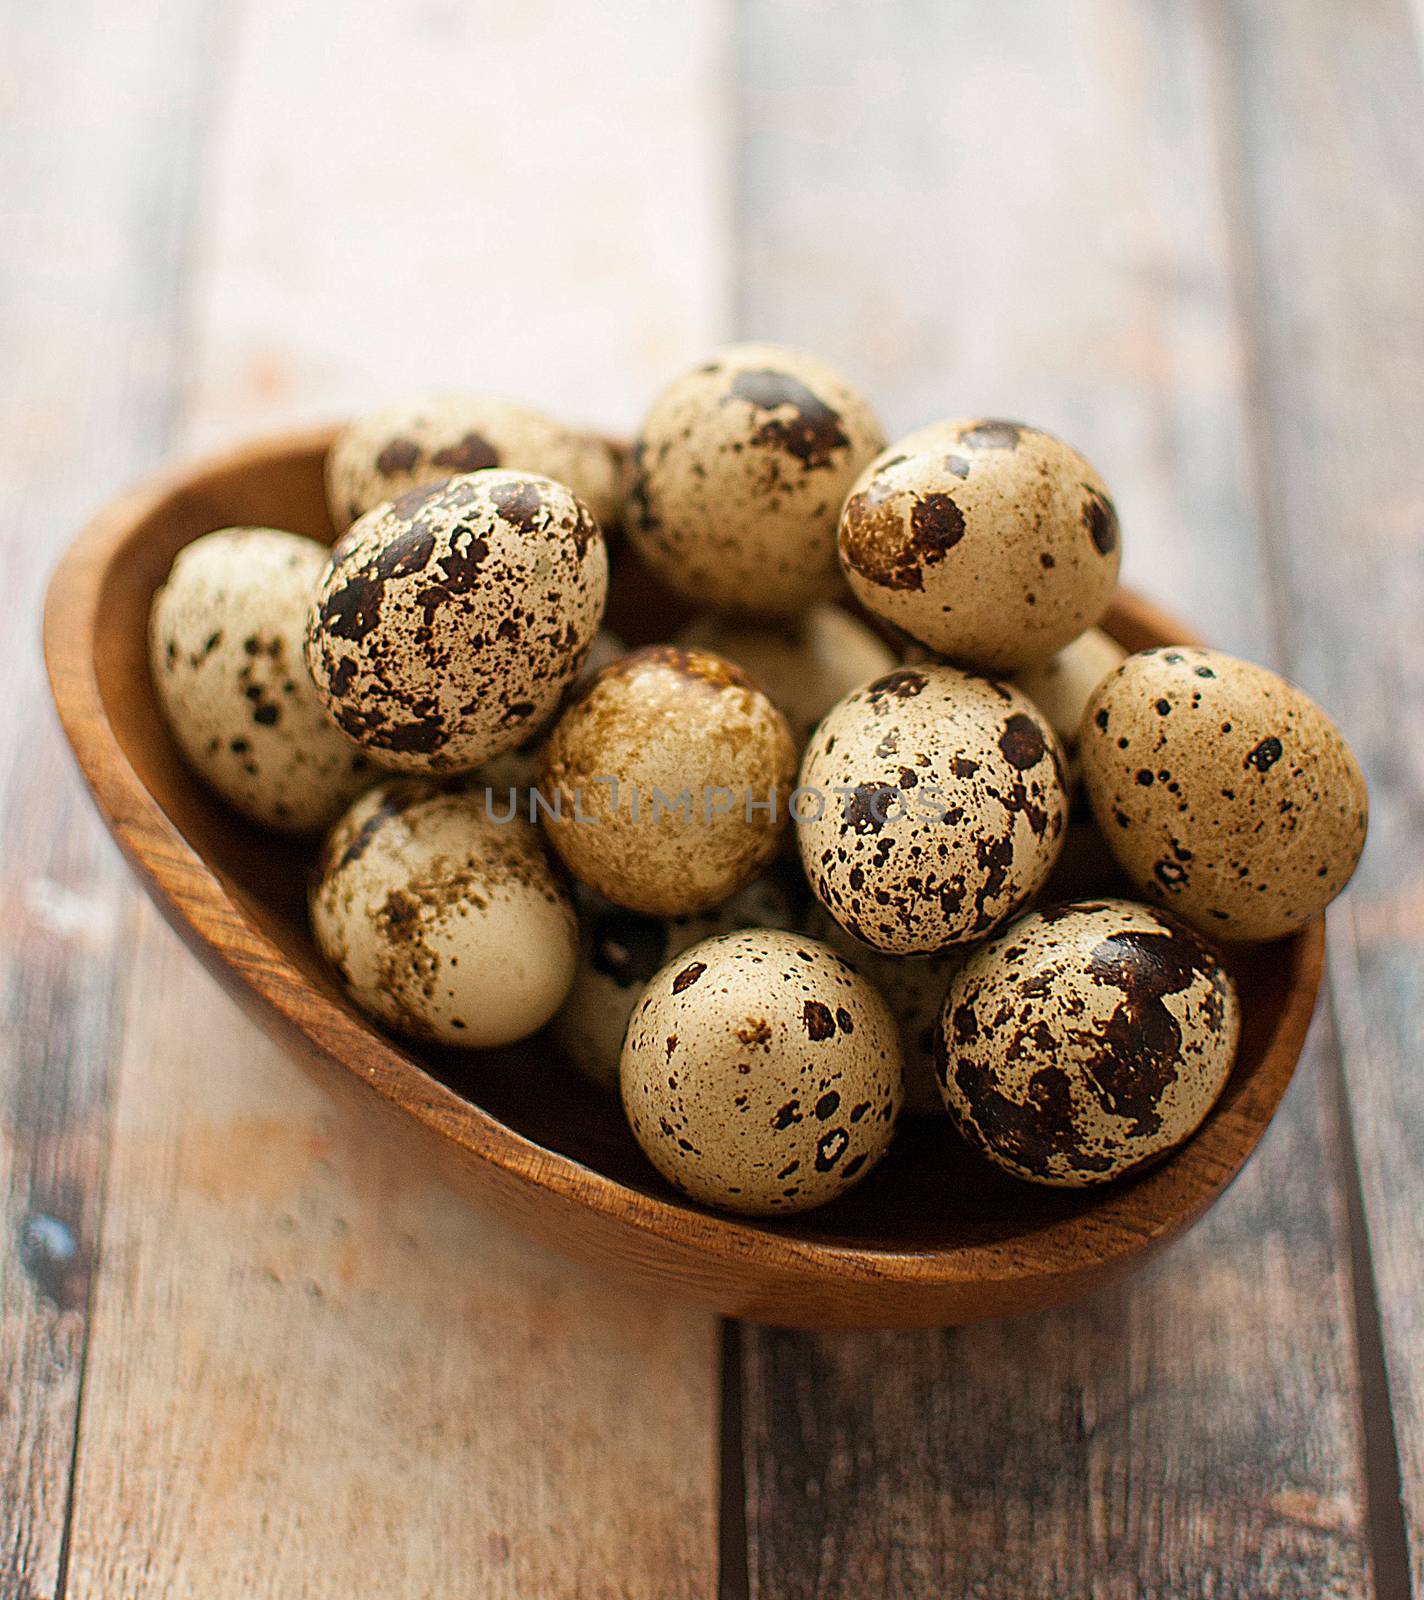 quail eggs by Dessie_bg